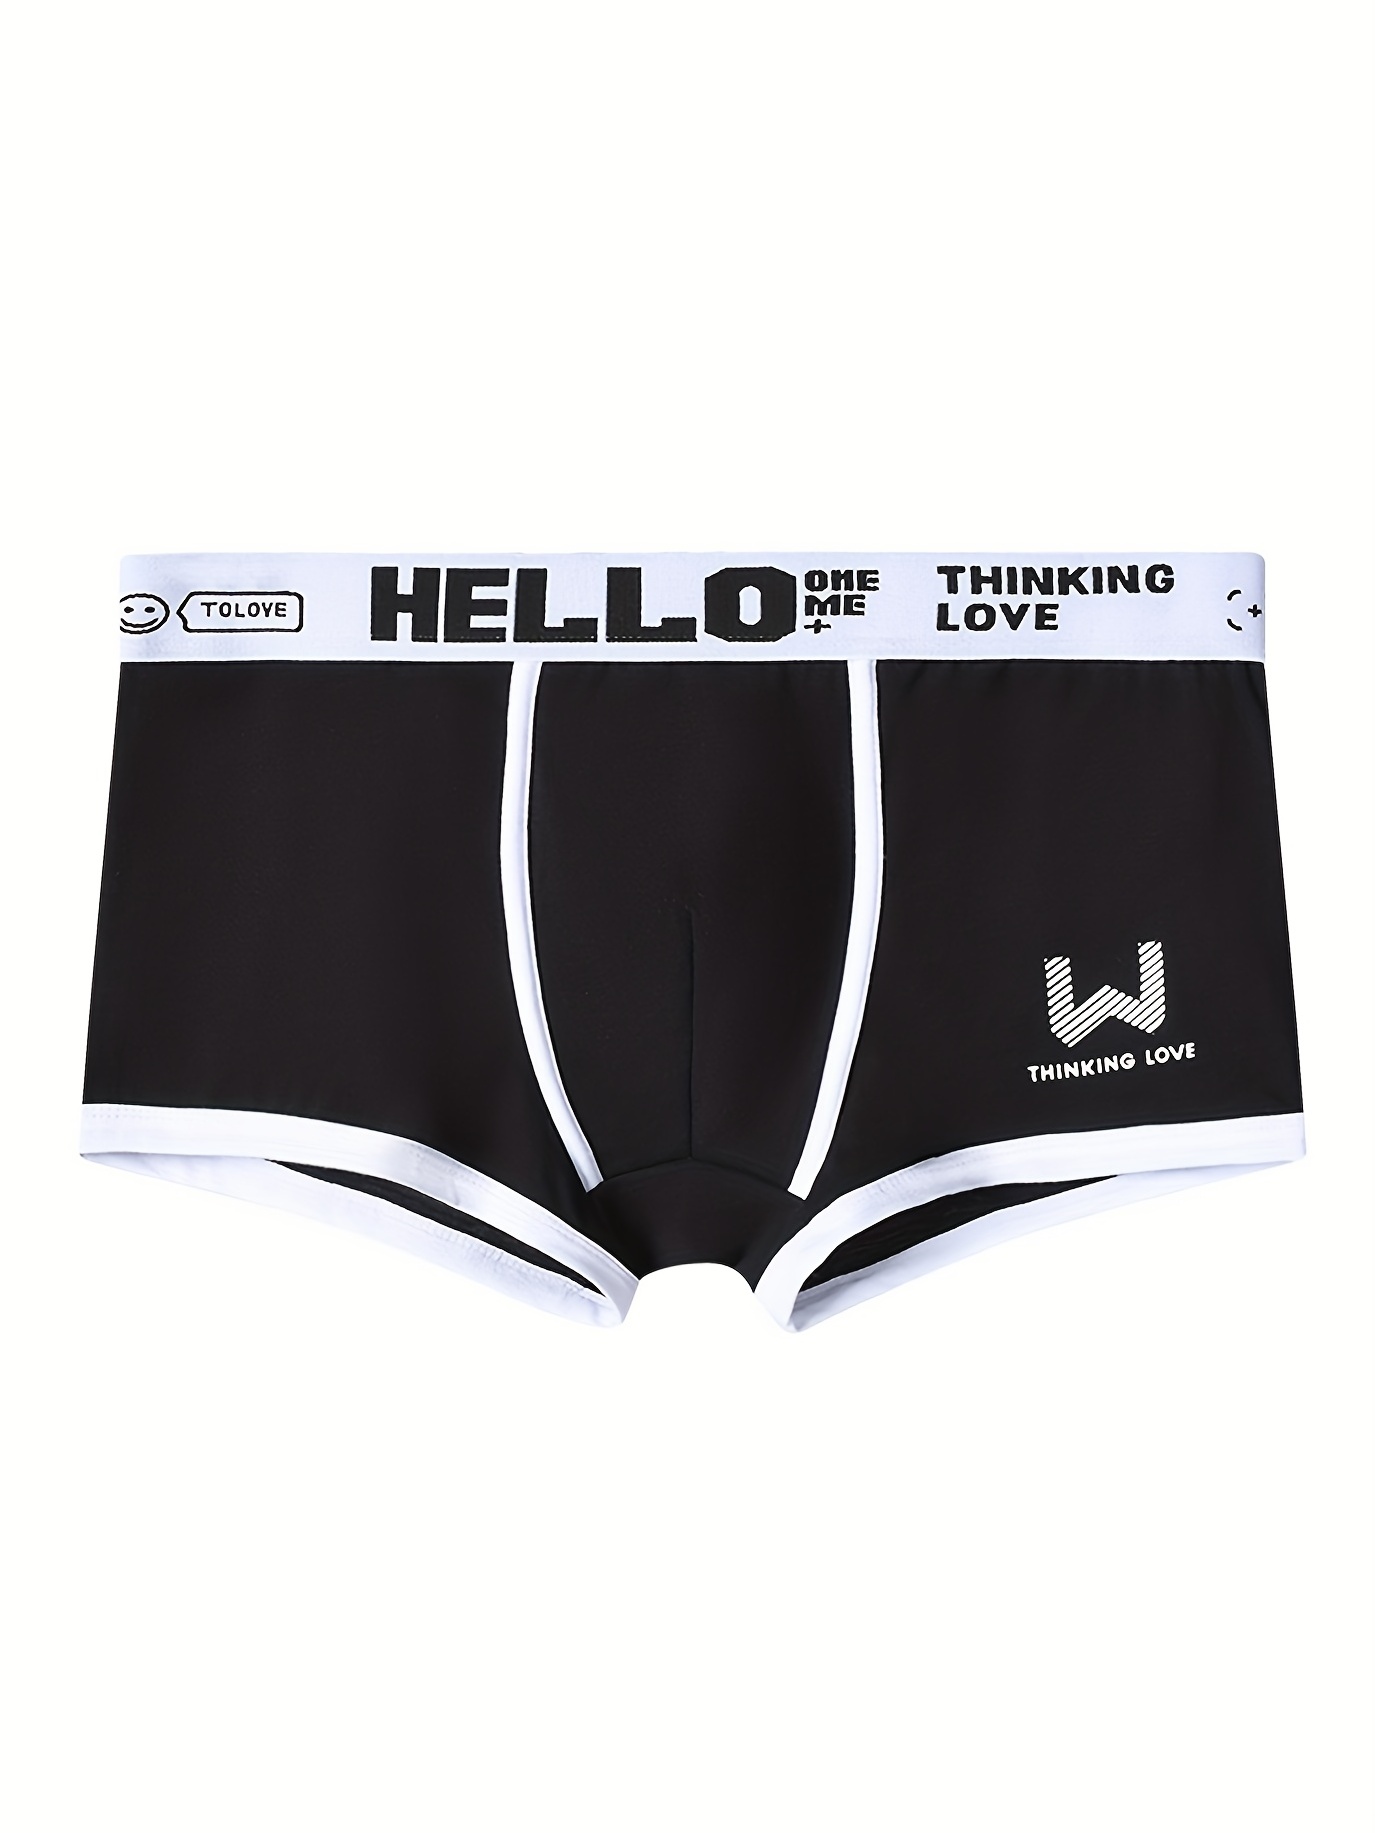 BODY WILD Hello Kitty Men's Underwear - Ocean Wave - Made in Japan